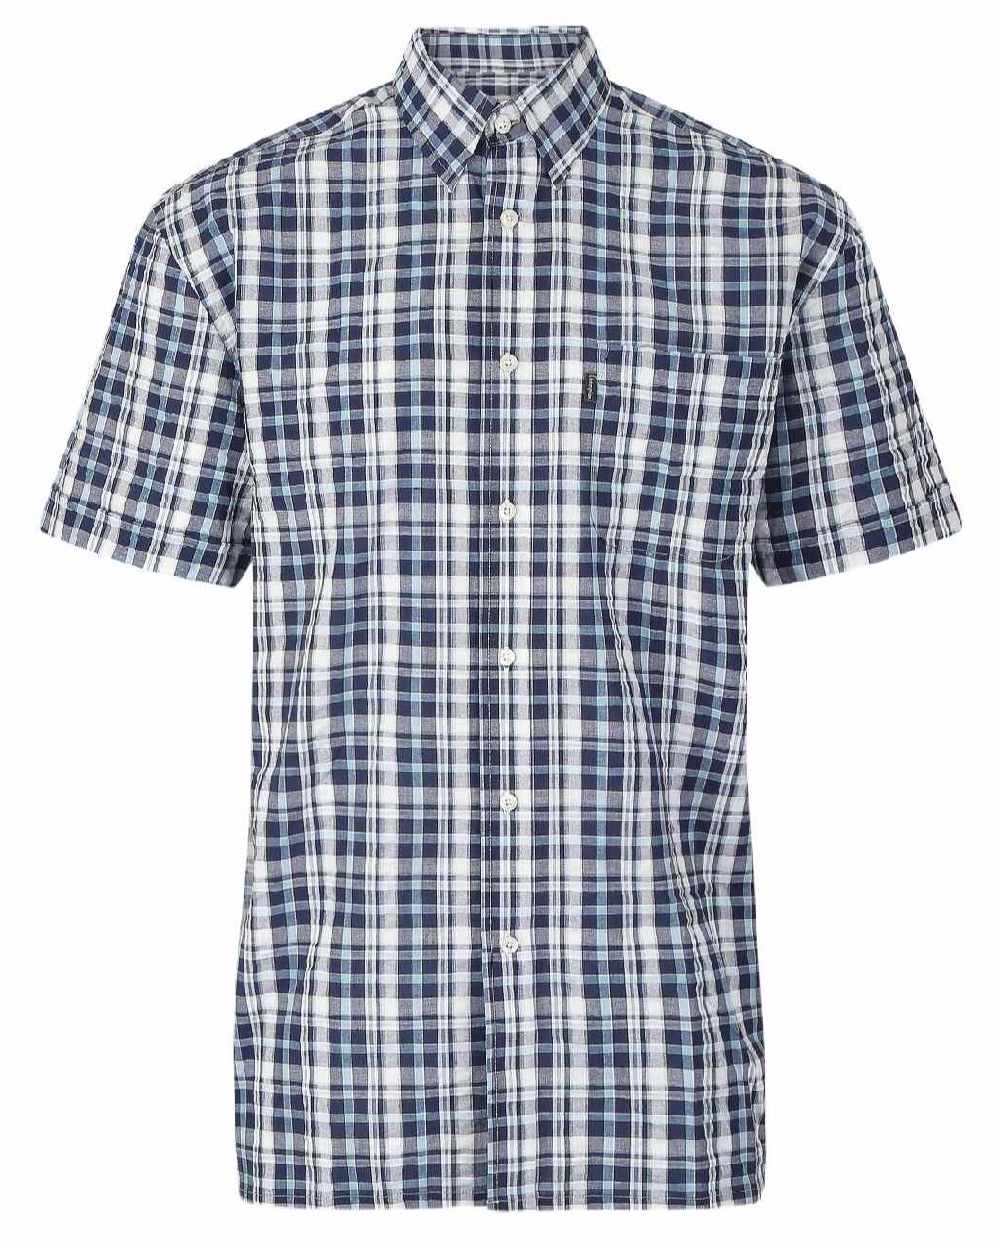 Blue coloured Champion Croyde Cotton Short Sleeved Shirt on white background 